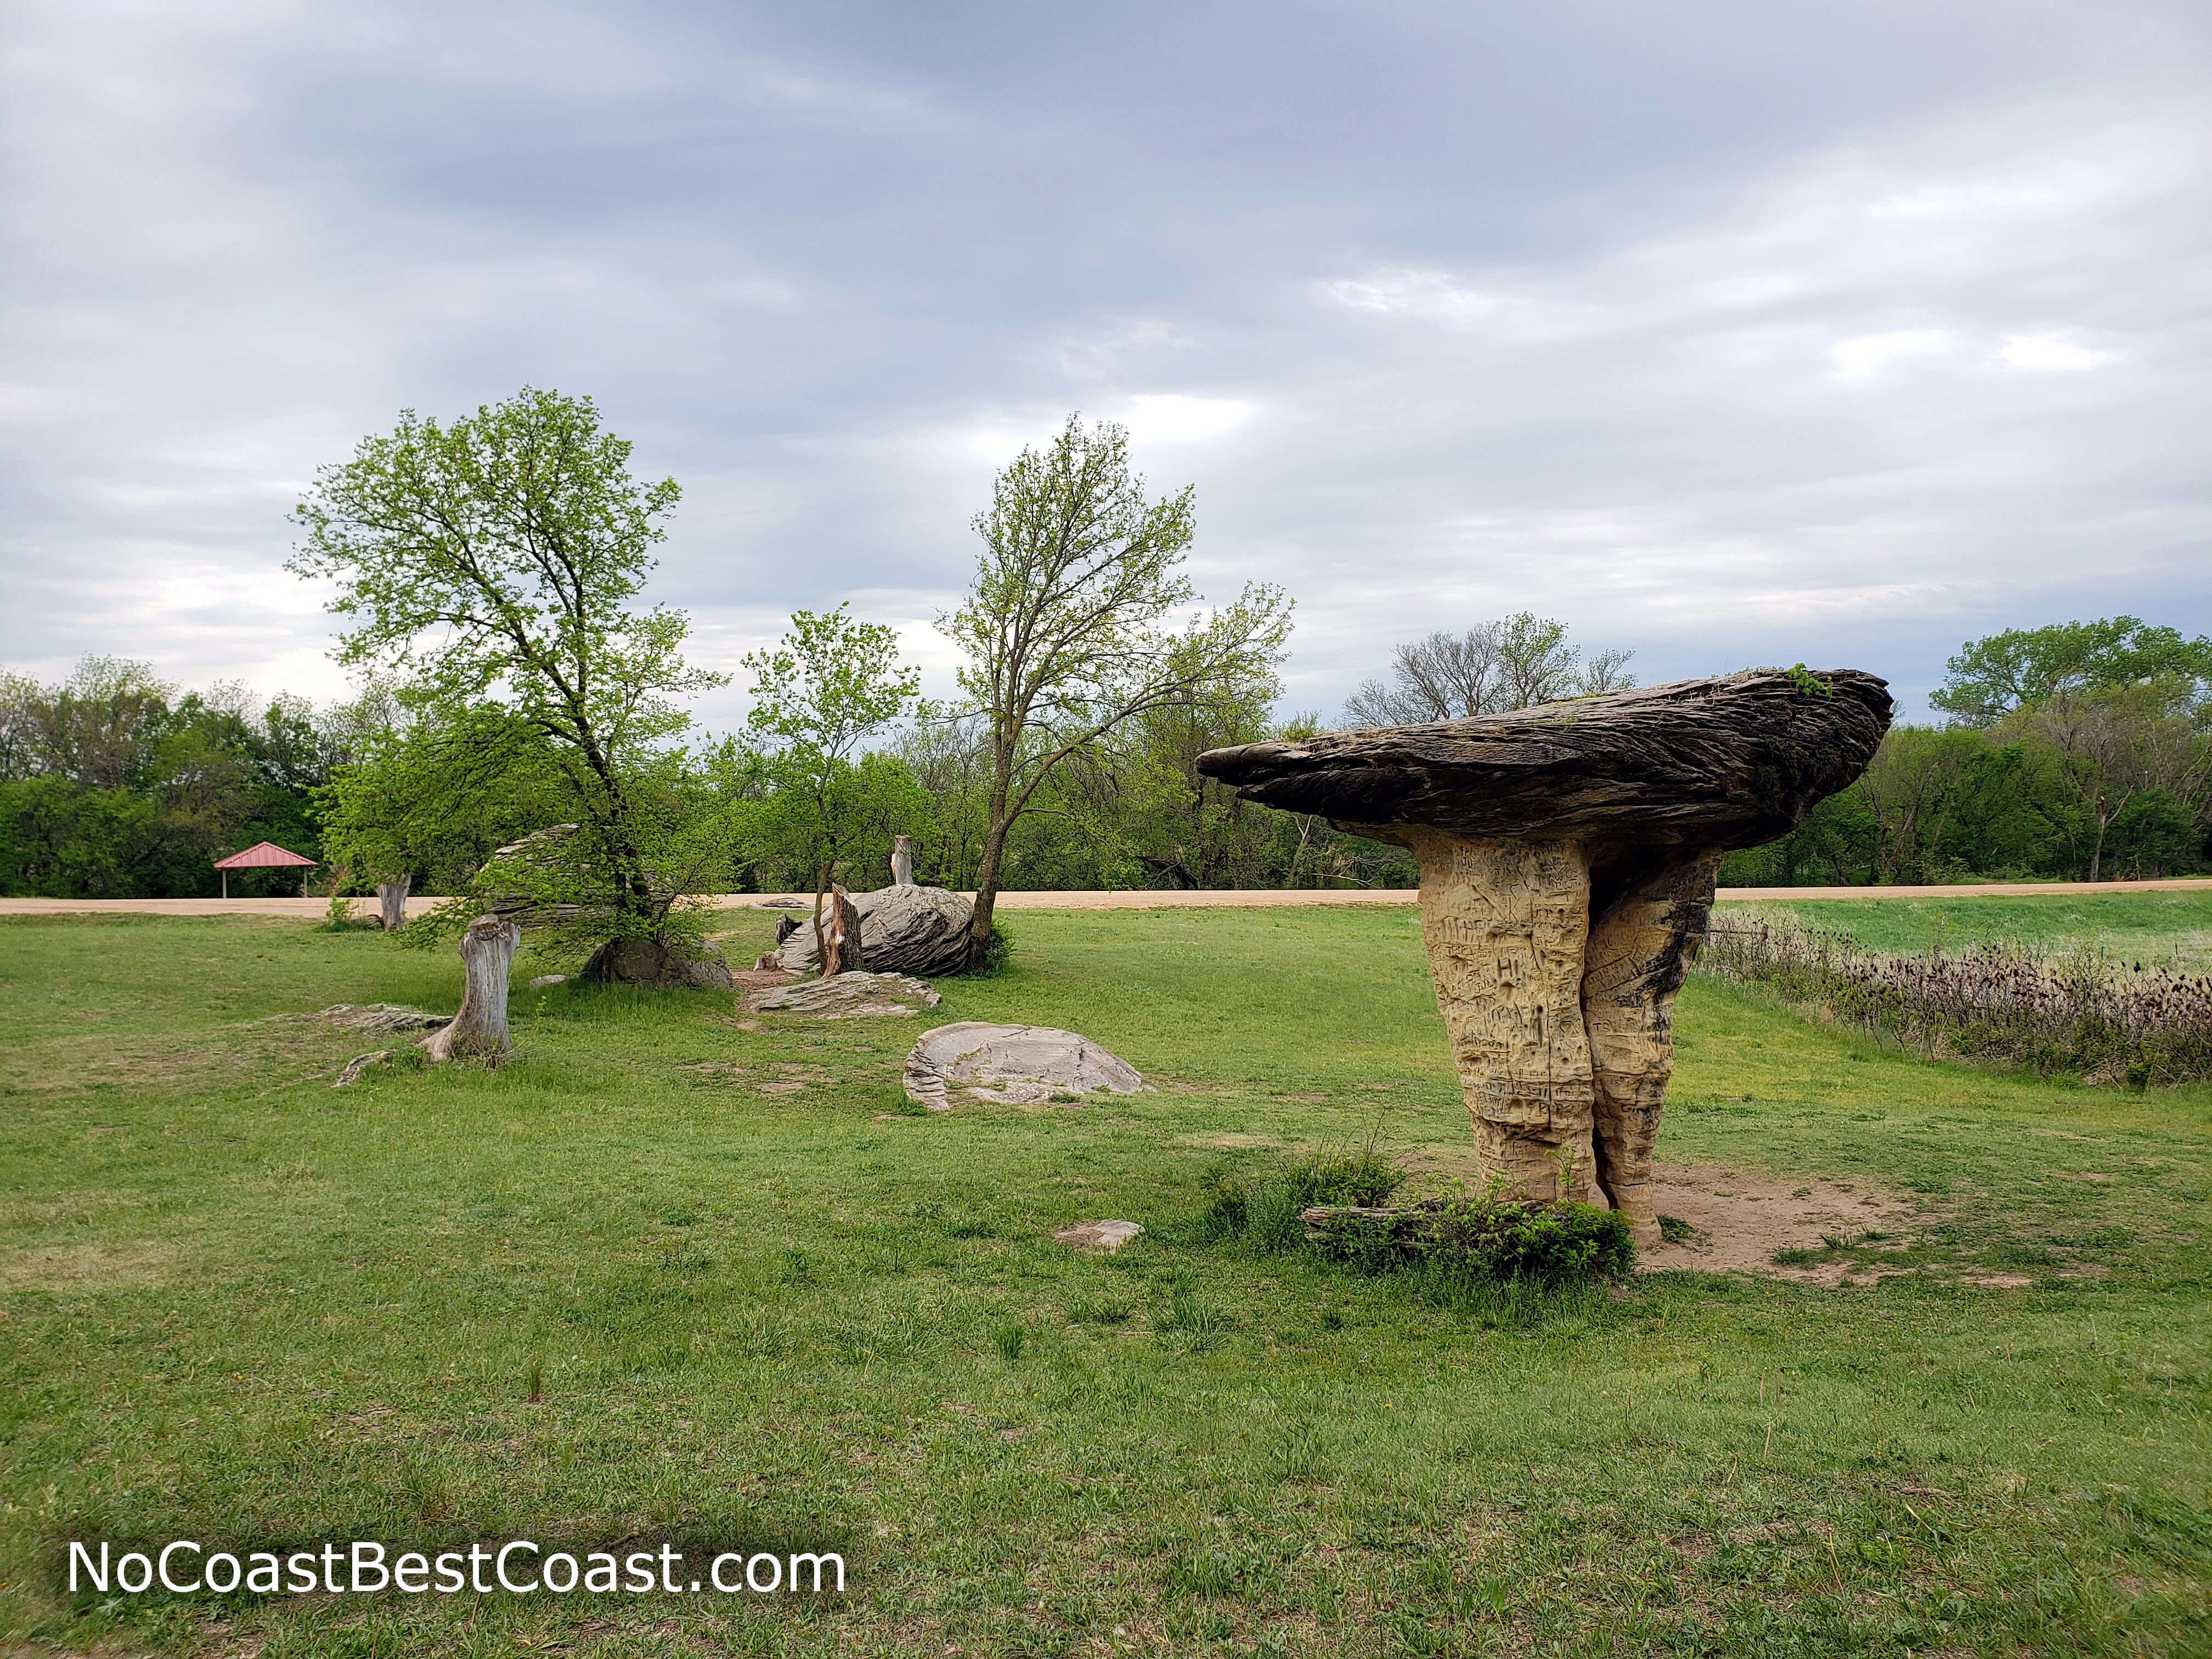 A distinctly mushroom-shaped rock